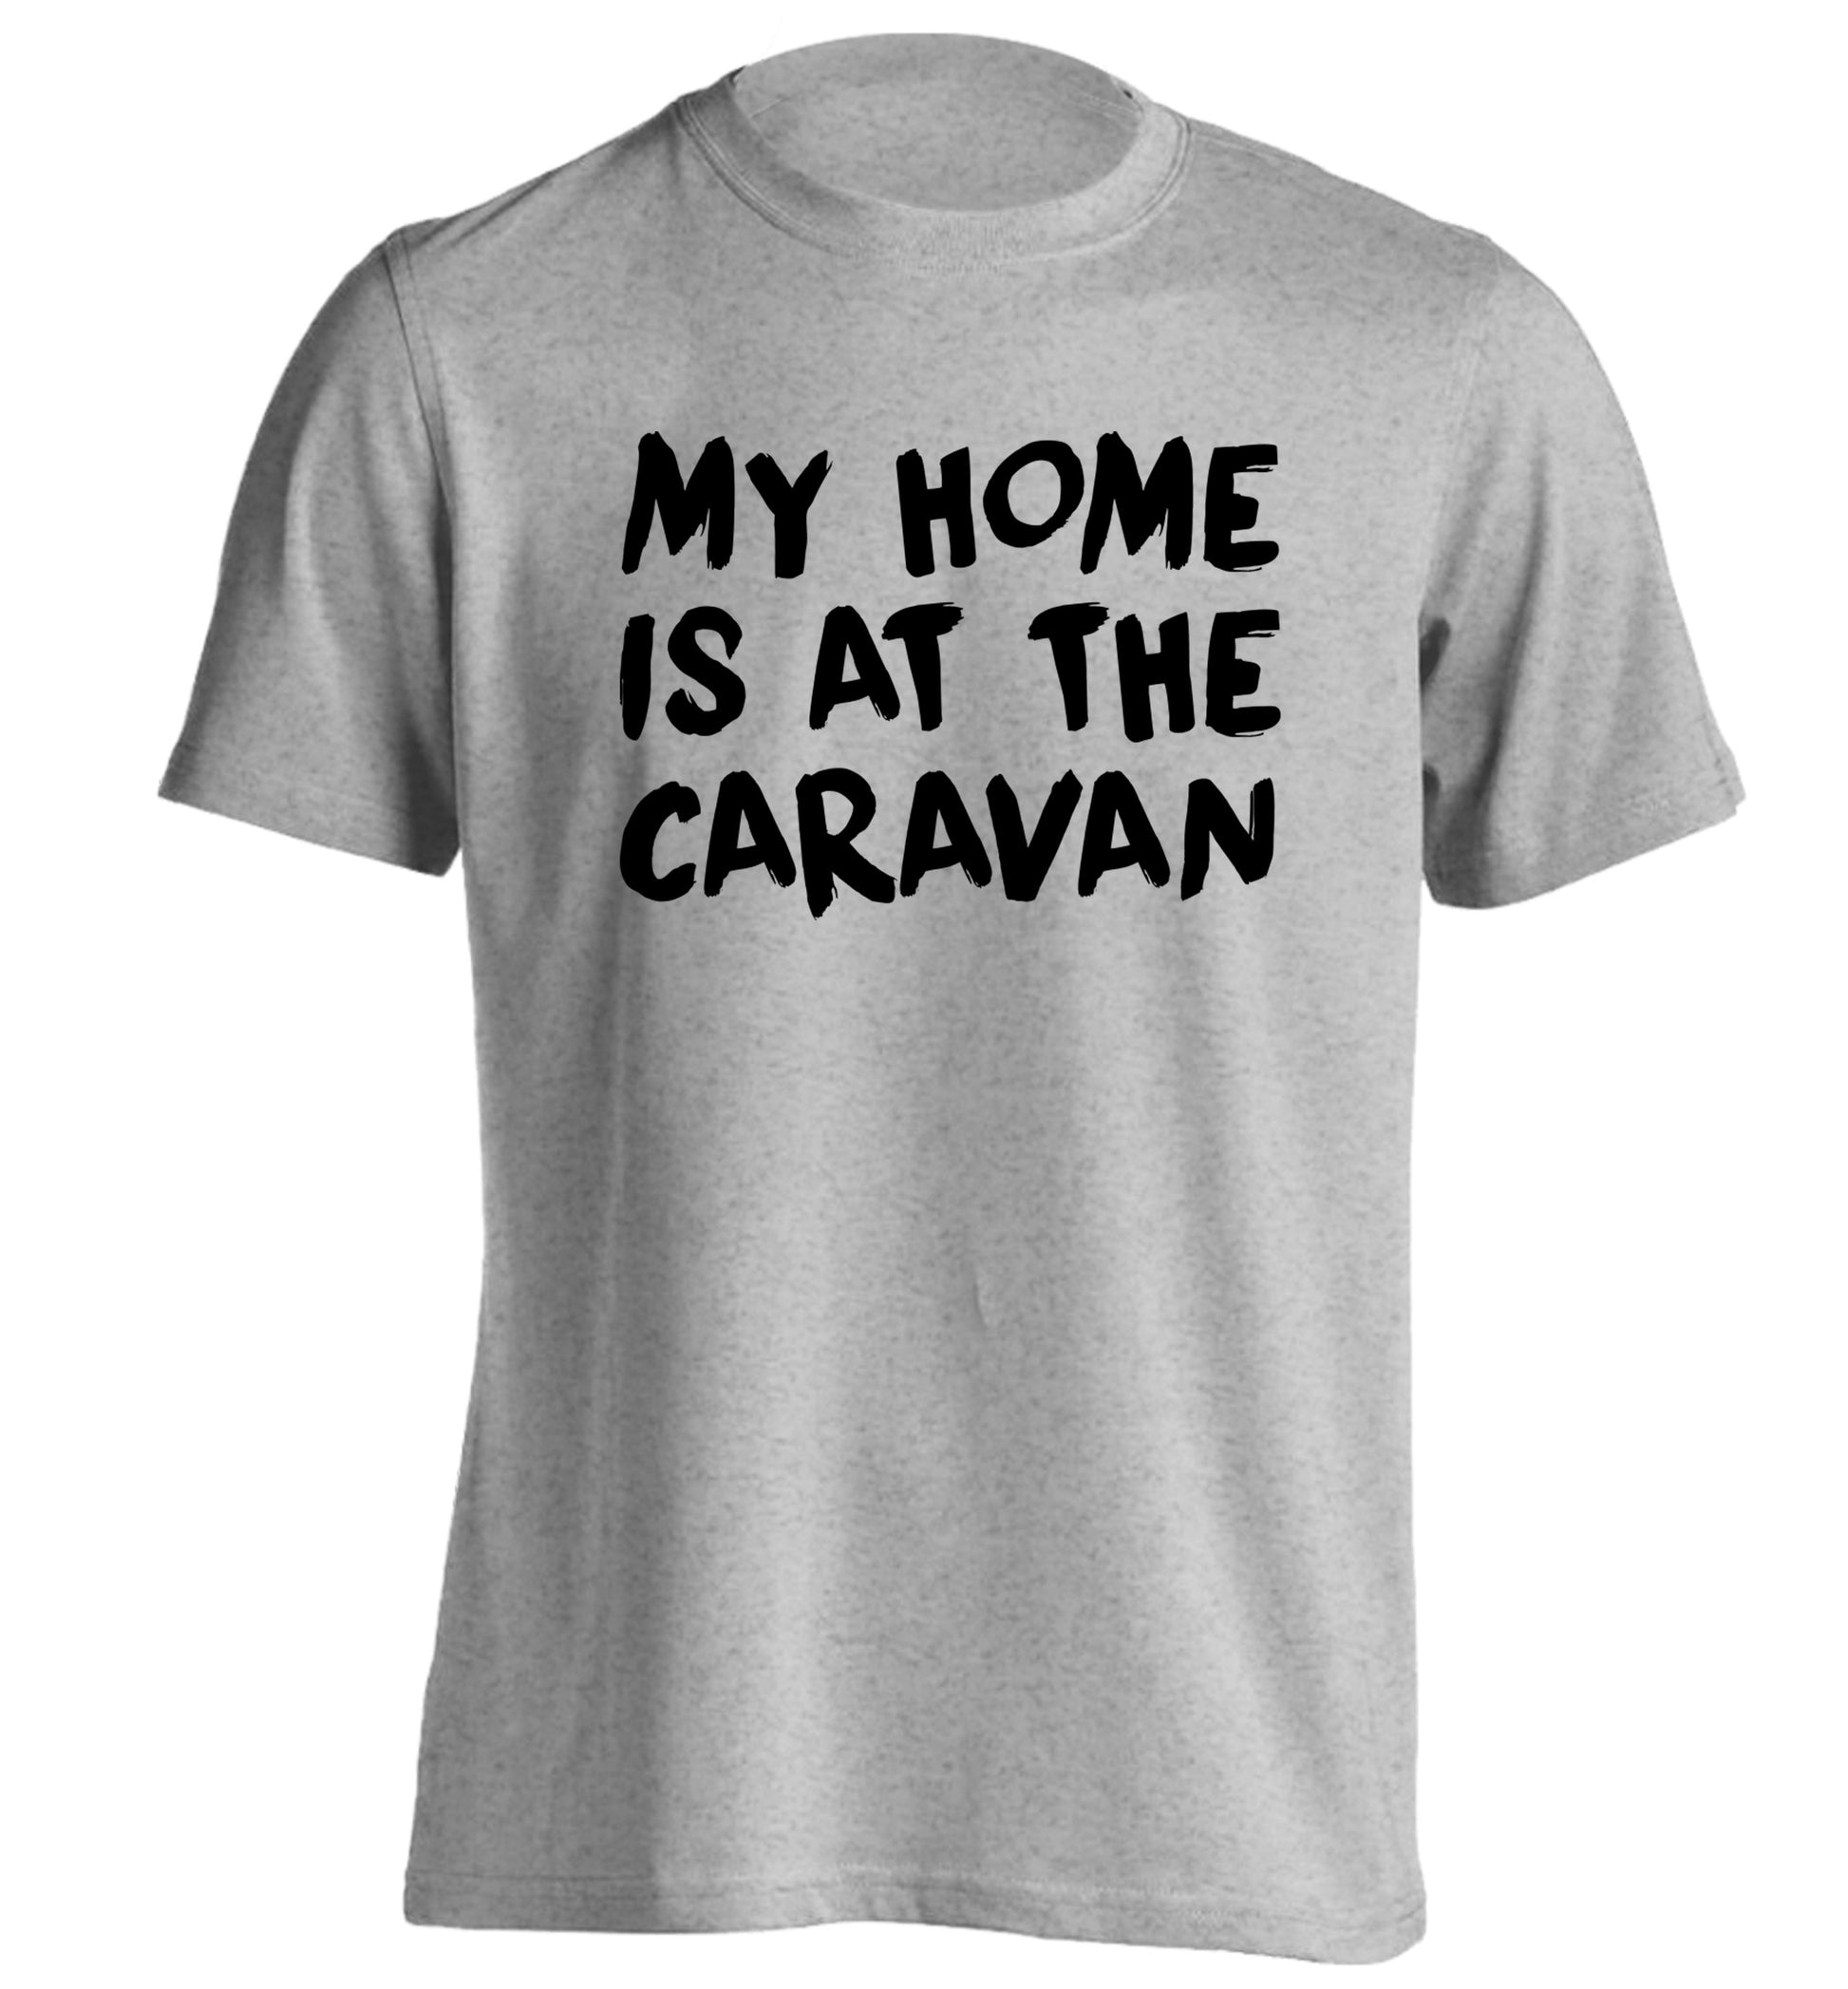 My home is at the caravan adults unisex grey Tshirt 2XL